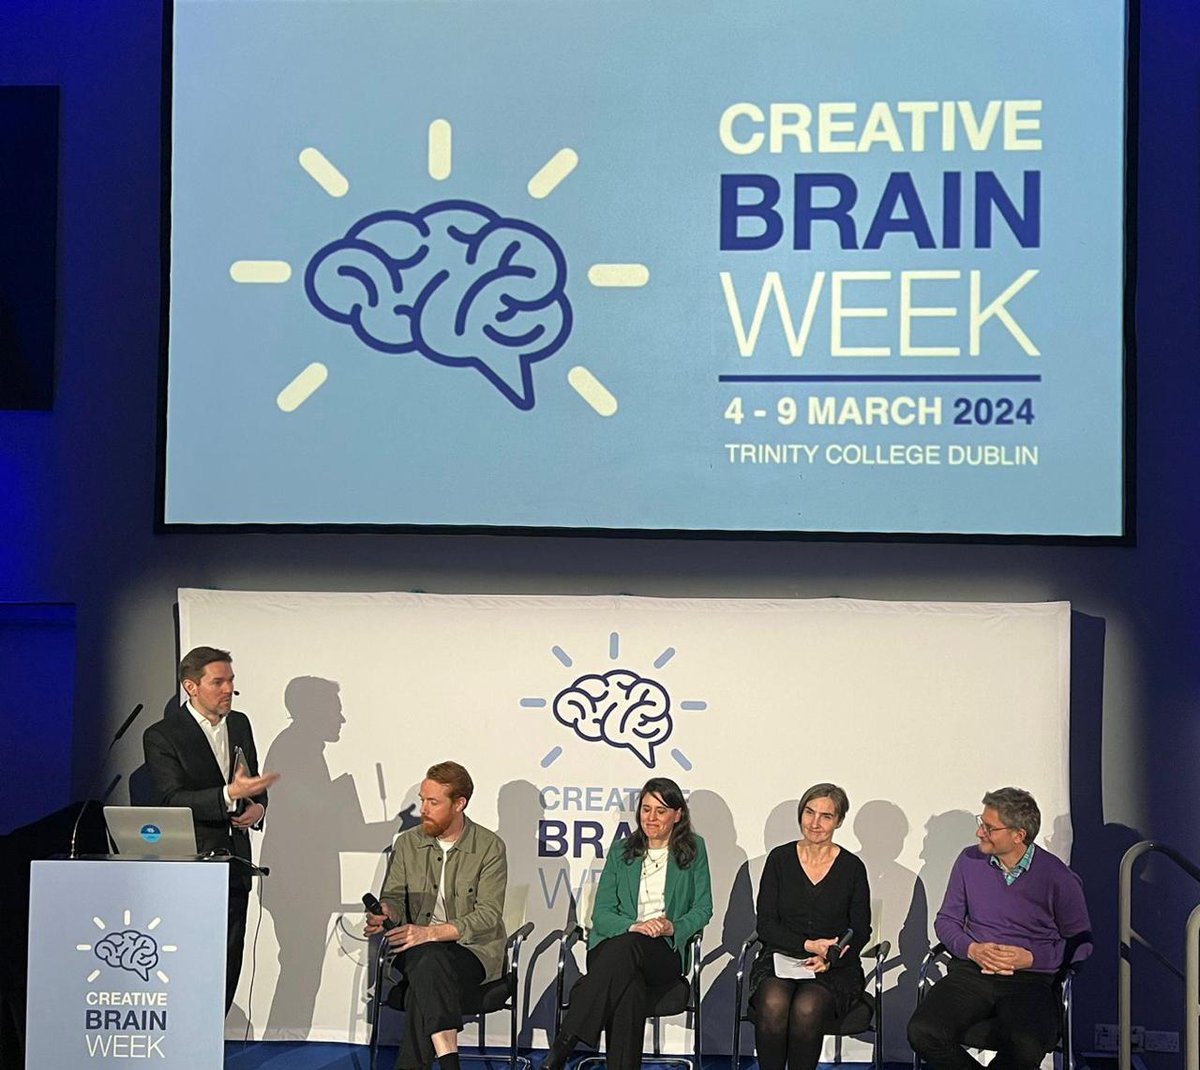 BrainLat at #CreativeBrainWeek with MyBrainRobbie.org 🧠💙, aiming to prevent dementia from childhood. Follow us for more cerebral health innovation! #BrainHealth #DementiaPrevention
@UAI_CL @Psicologia_UAI @UdeSA @CNCUdeSA @gerochile @GBHI_Fellows @atlanticfellows